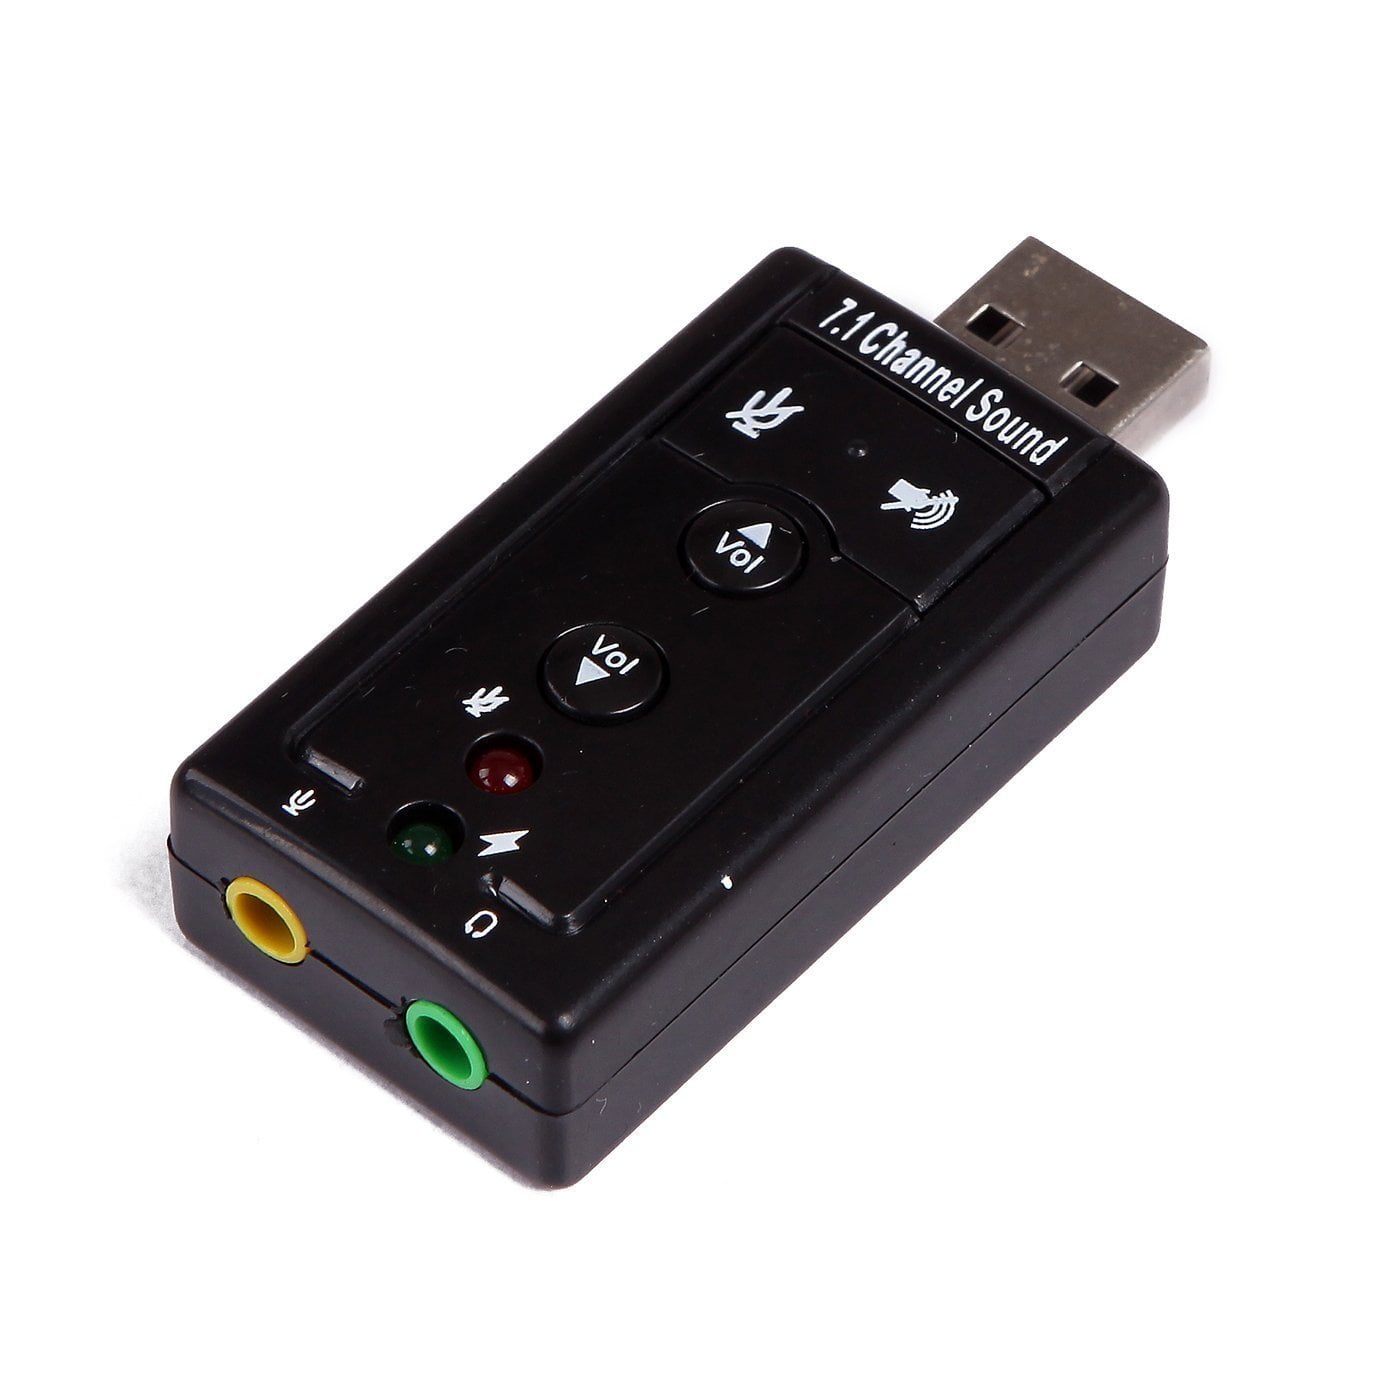 Mini USB 2.0 7.1 Channel Audio Sound Card Sound Adapter PC Laptop BAF 